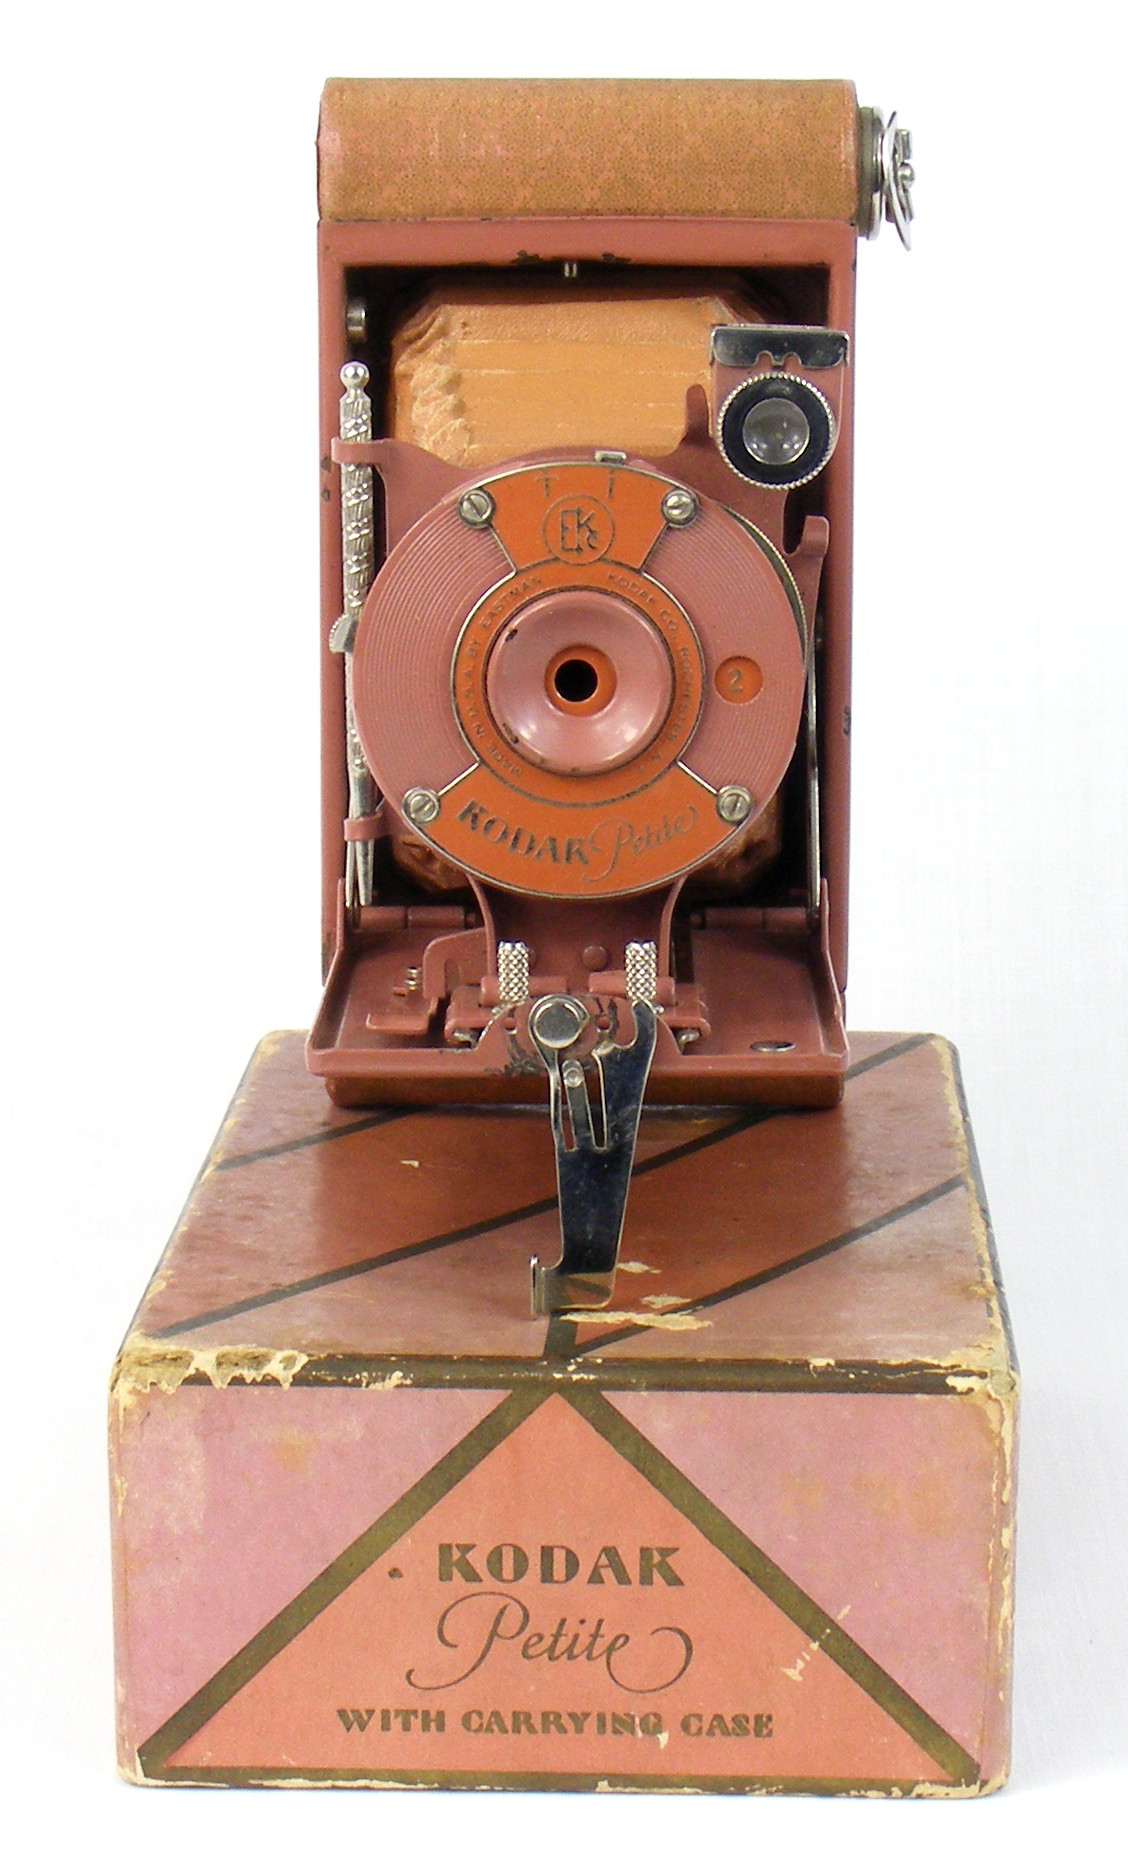 Image of Kodak Petite folding camera in Old Rose with box